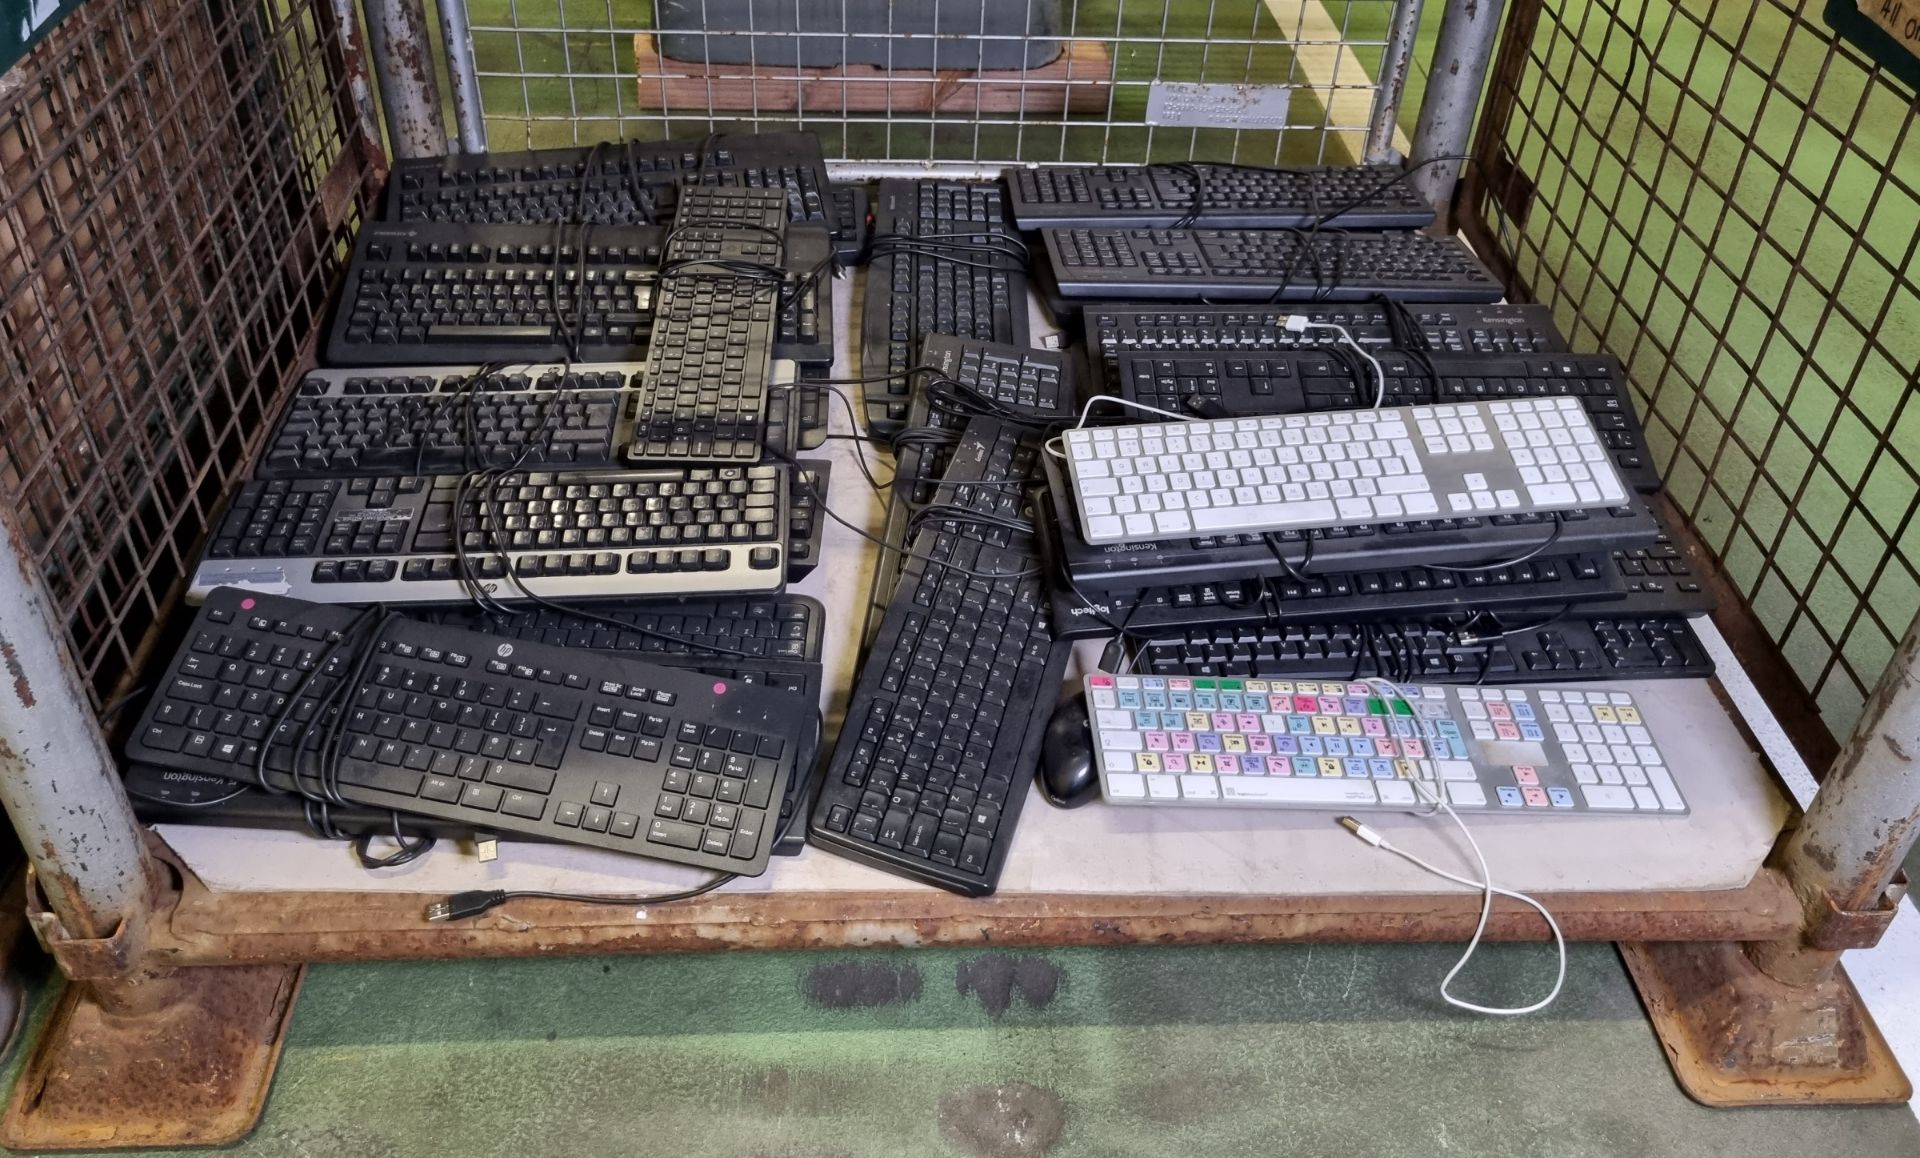 30x computer keyboards of multiple makes - Logitech, Lenovo, Microsoft and Kensington